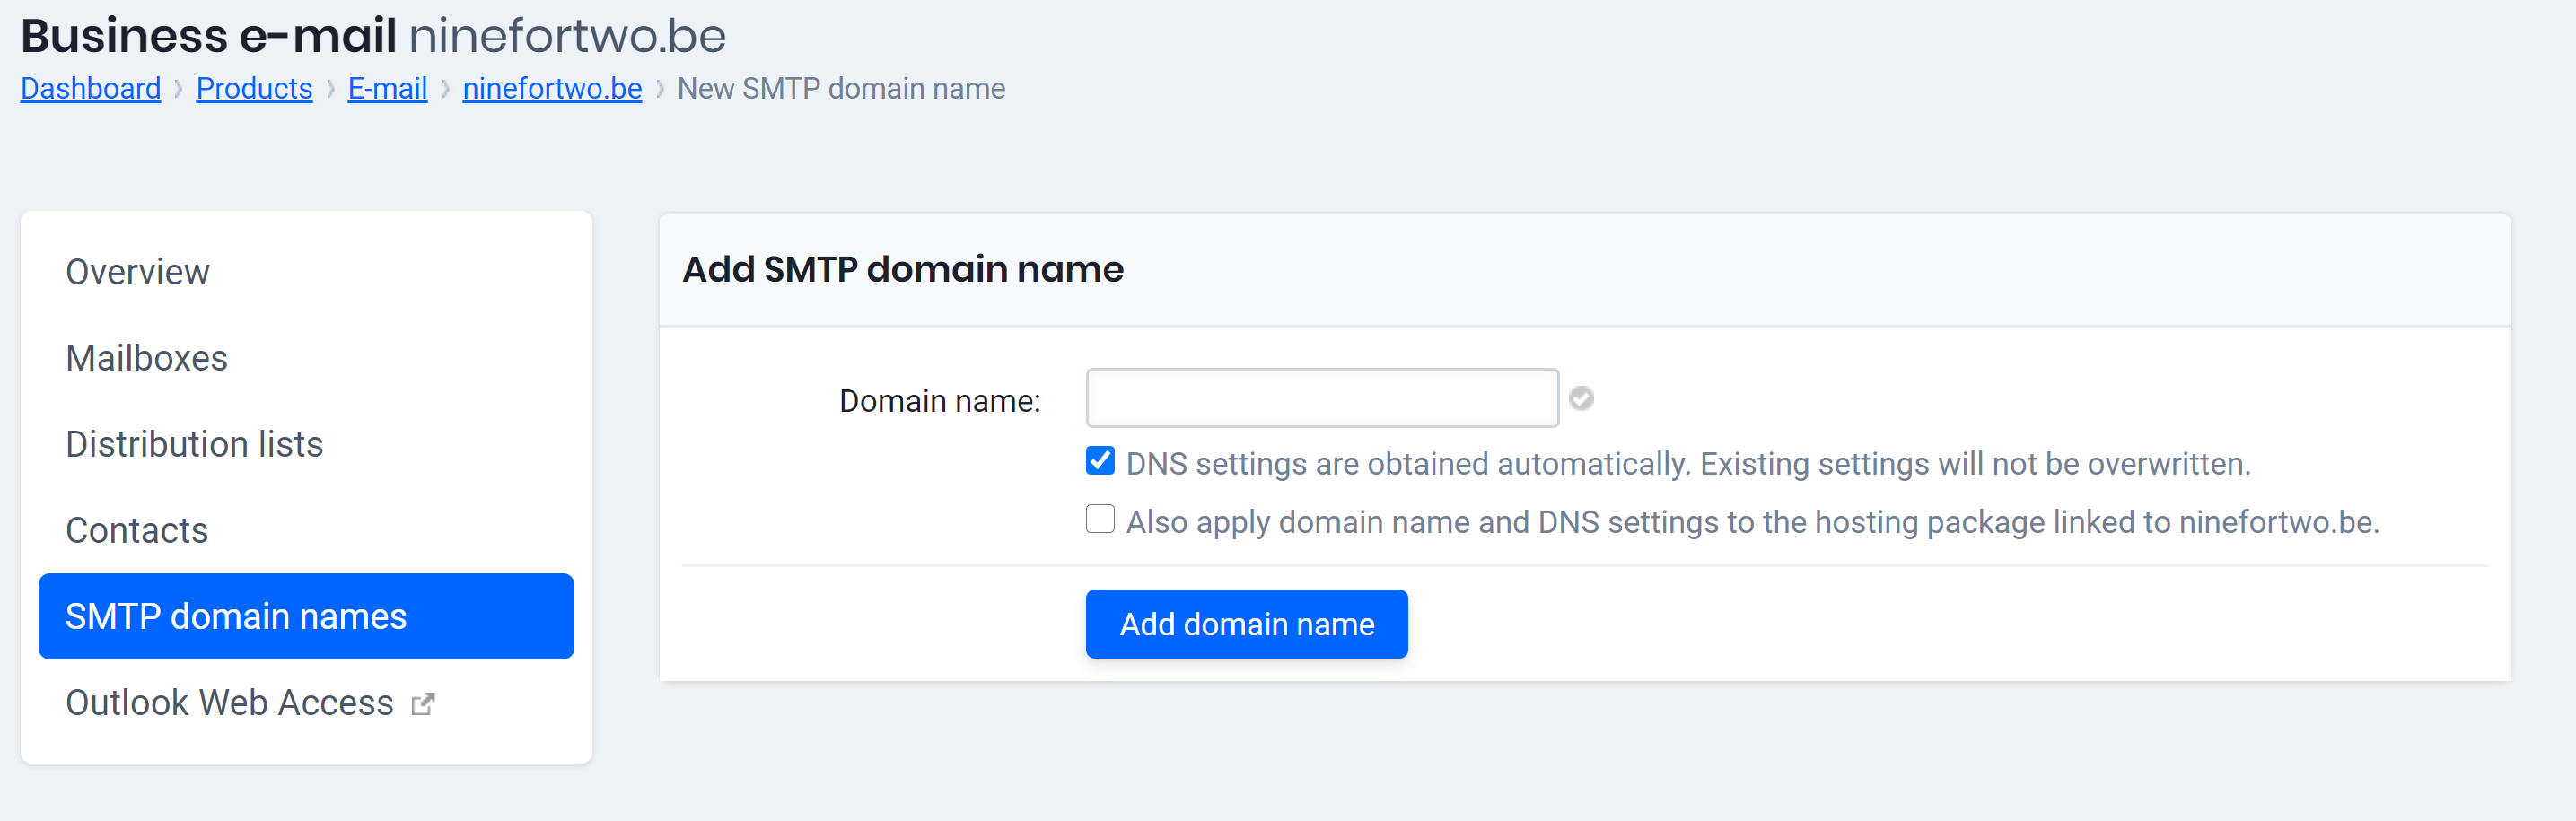 add smtp domain name